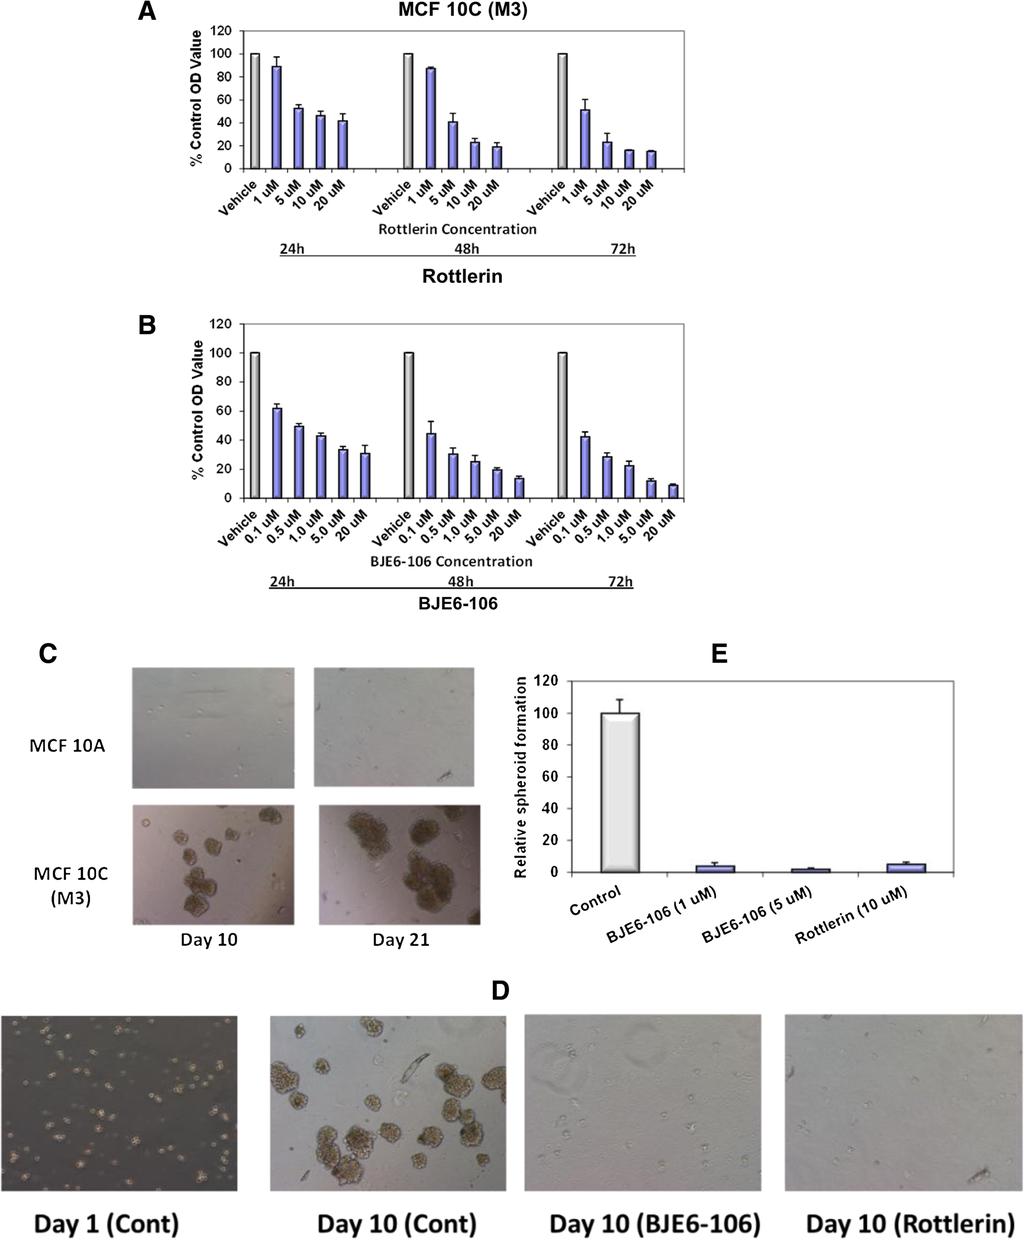 Chen et al. BMC Cancer 2014, 14:90 http://www.biomedcentral.